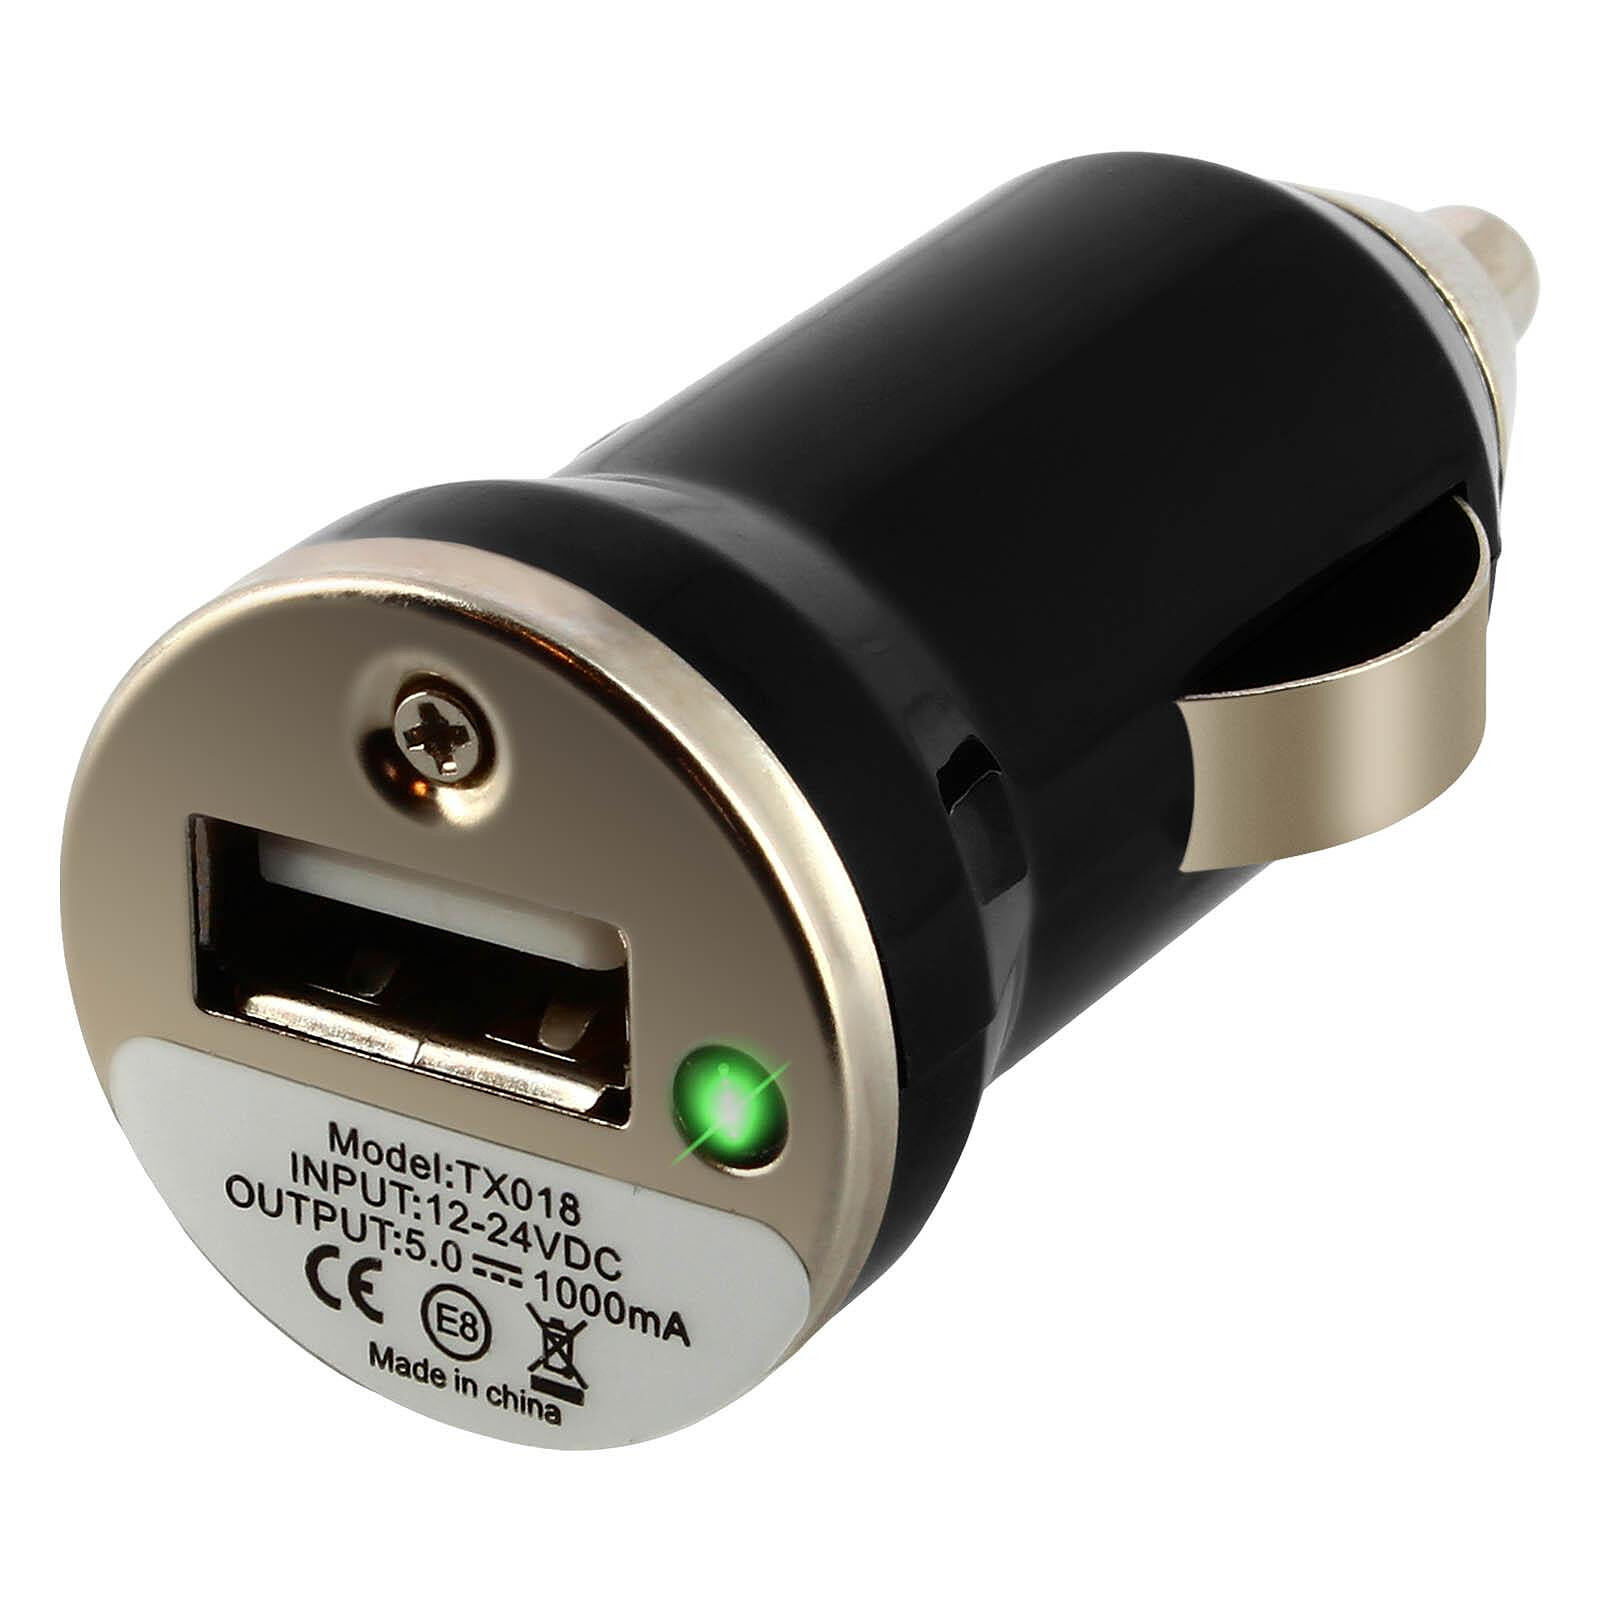 Avizar Kit mains libres Auto Bluetooth Chargeur Allume-cigare Port USB  Carte SD Noir - Kit main libre - LDLC